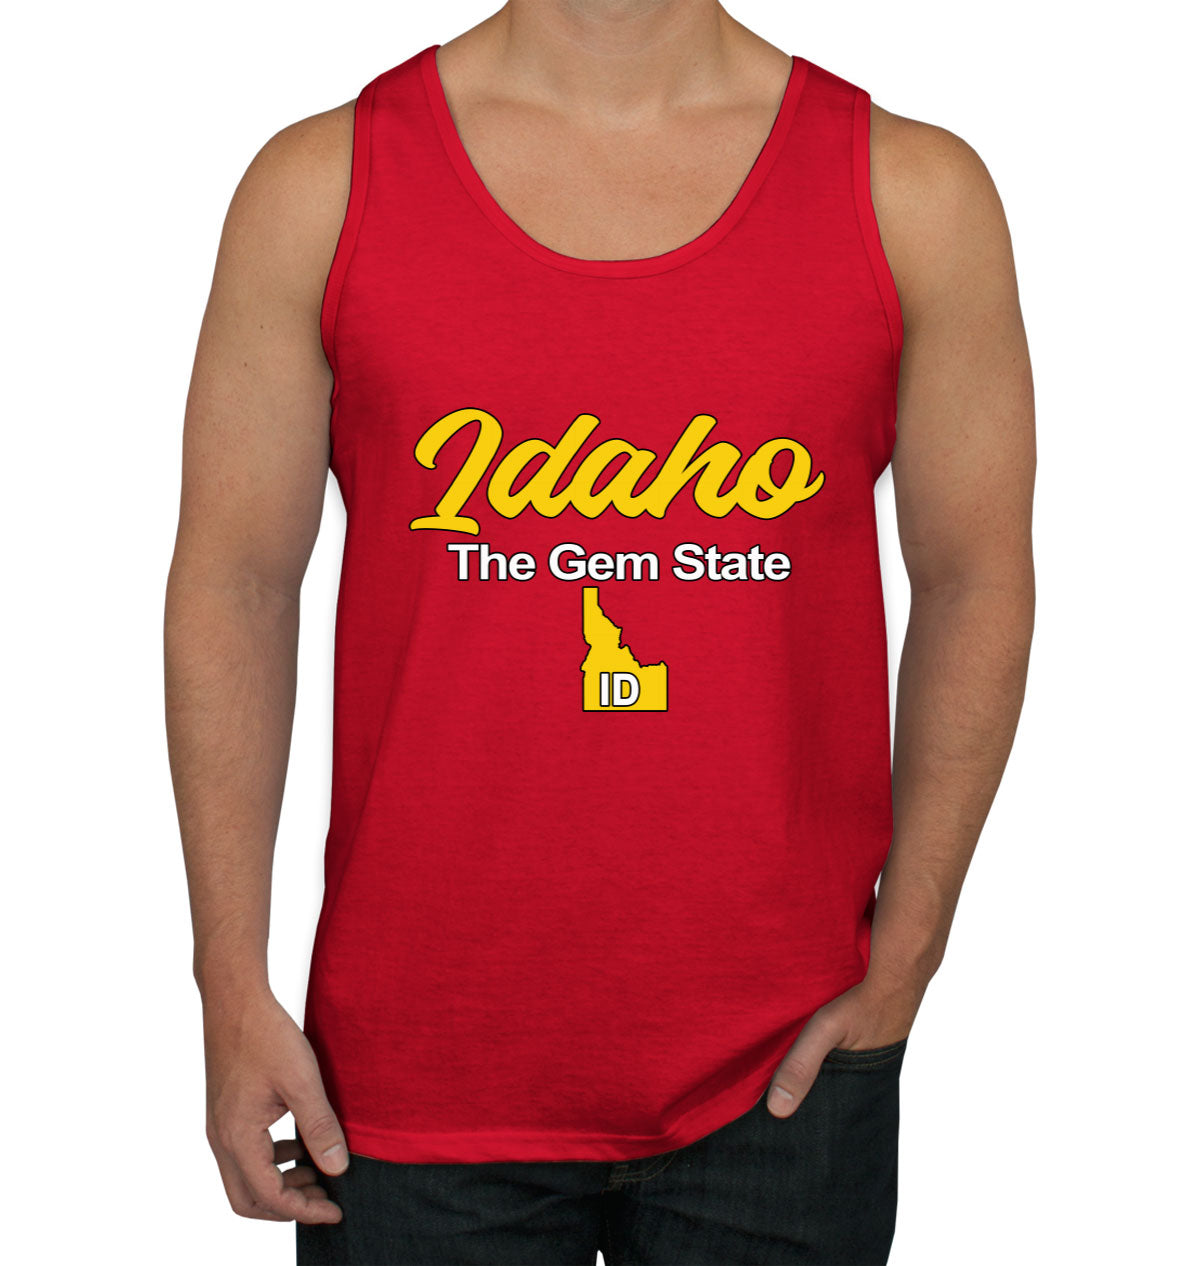 Idaho The Gem State Men's Tank Top